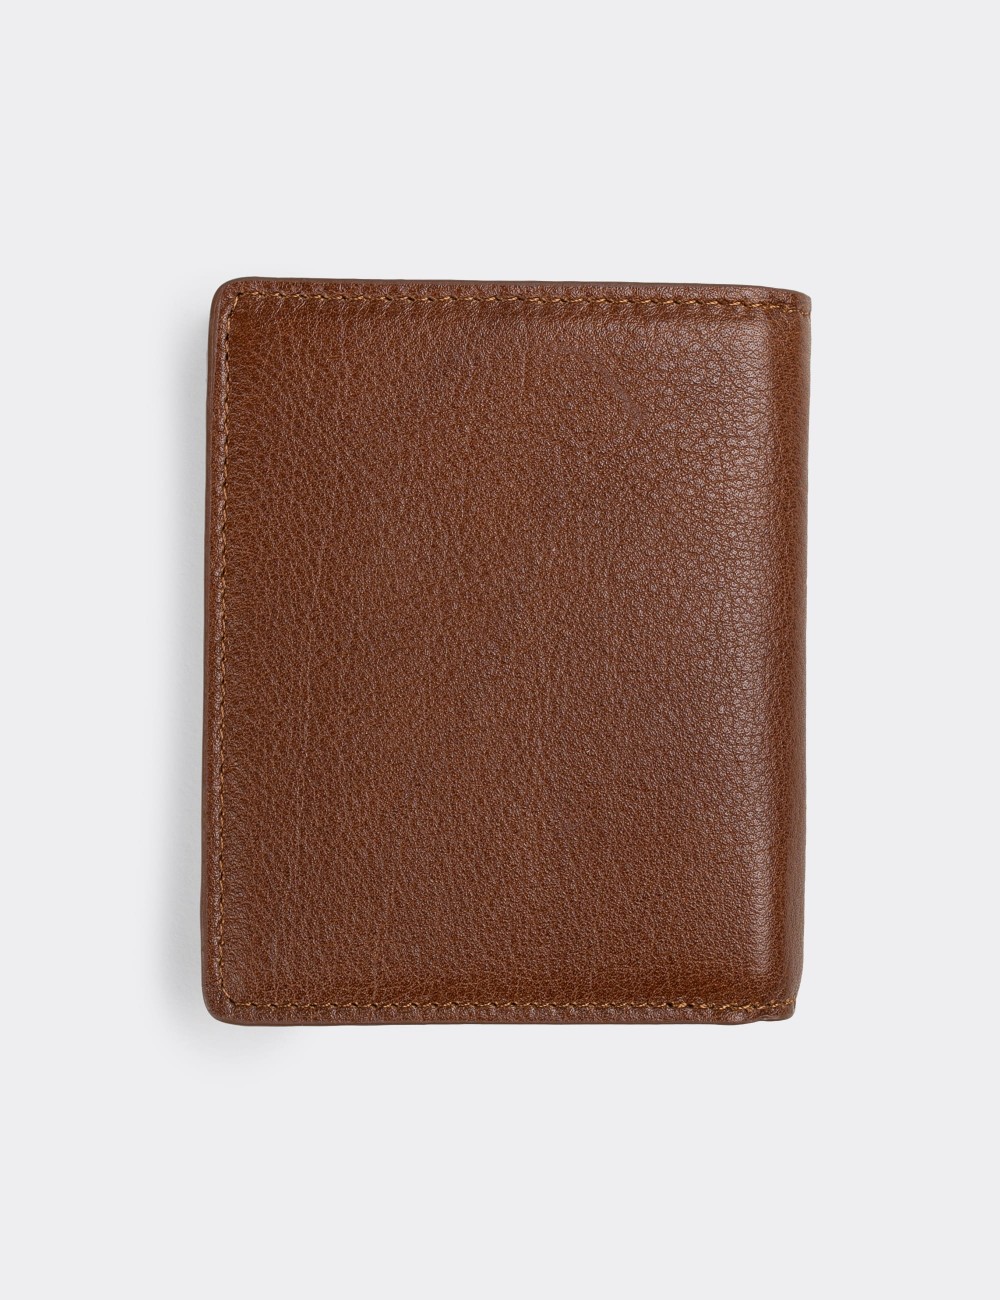  Leather Tan Men's Wallet - 0290AMTBAZ01